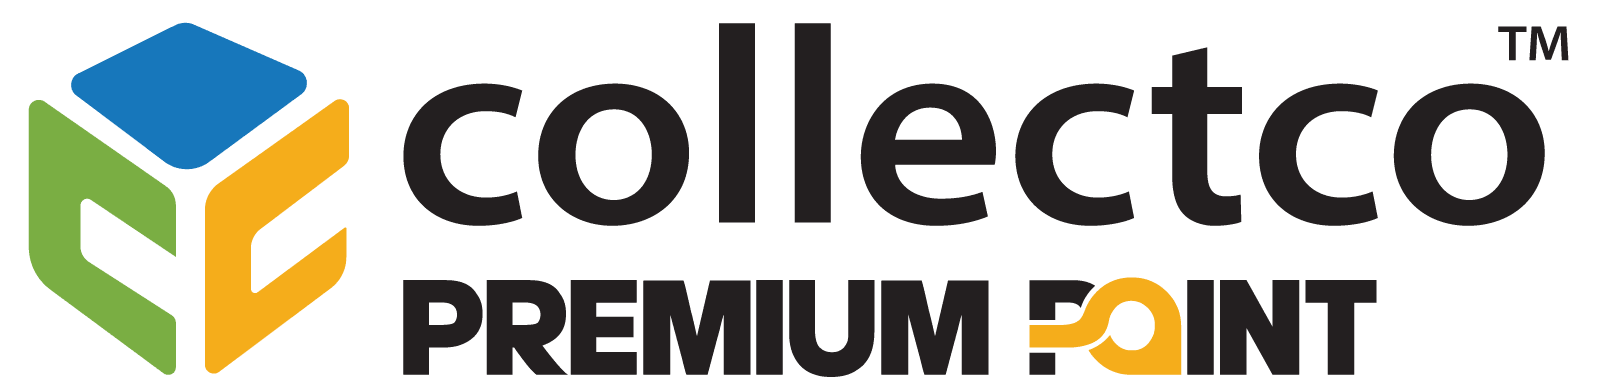 CollectCo Premium Point Logo